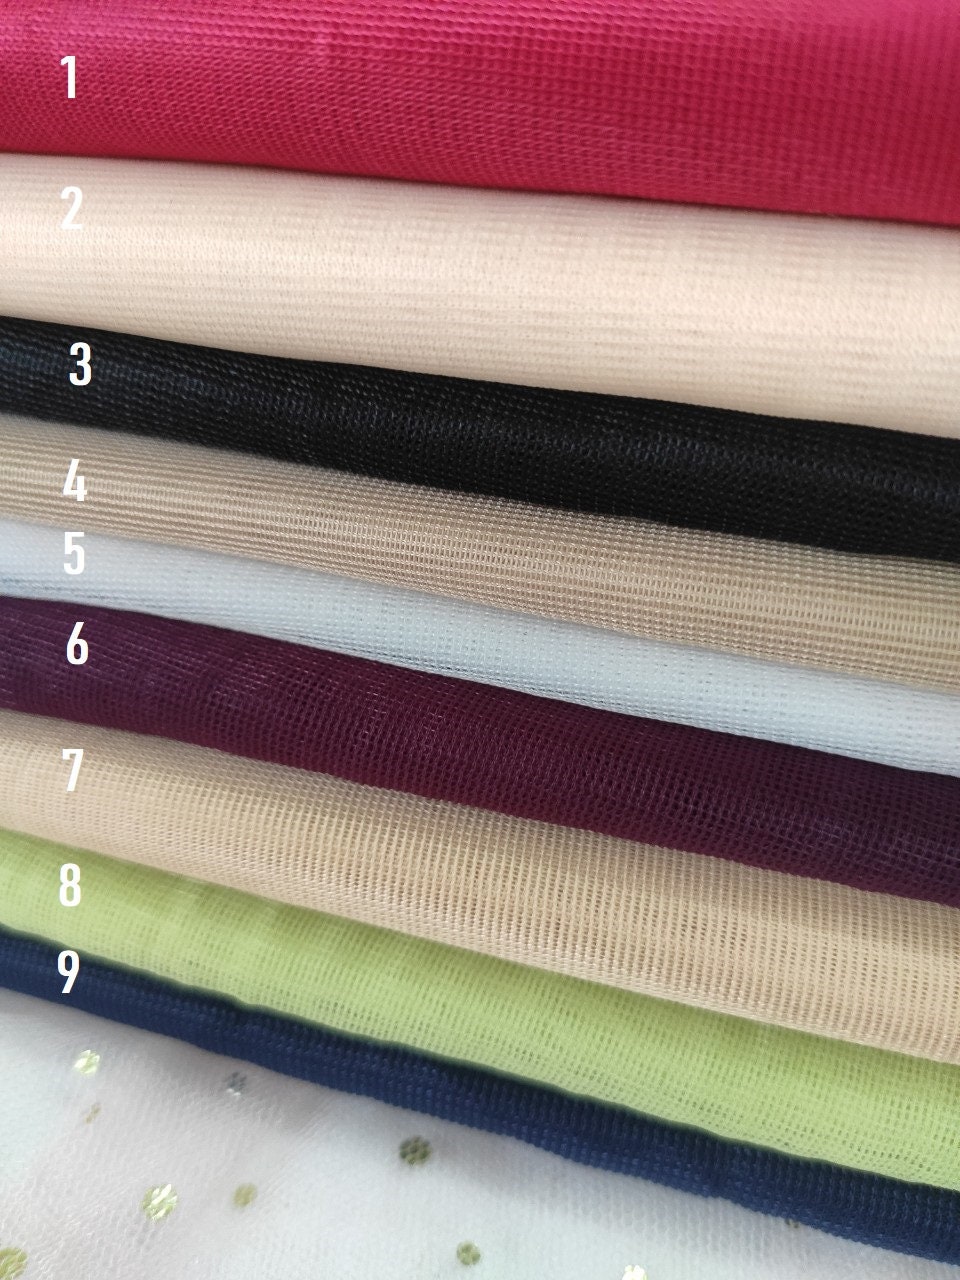 Bra Lining Fabric, Lightweight Sheer Cup Lining, Nylon Fabric, Bra